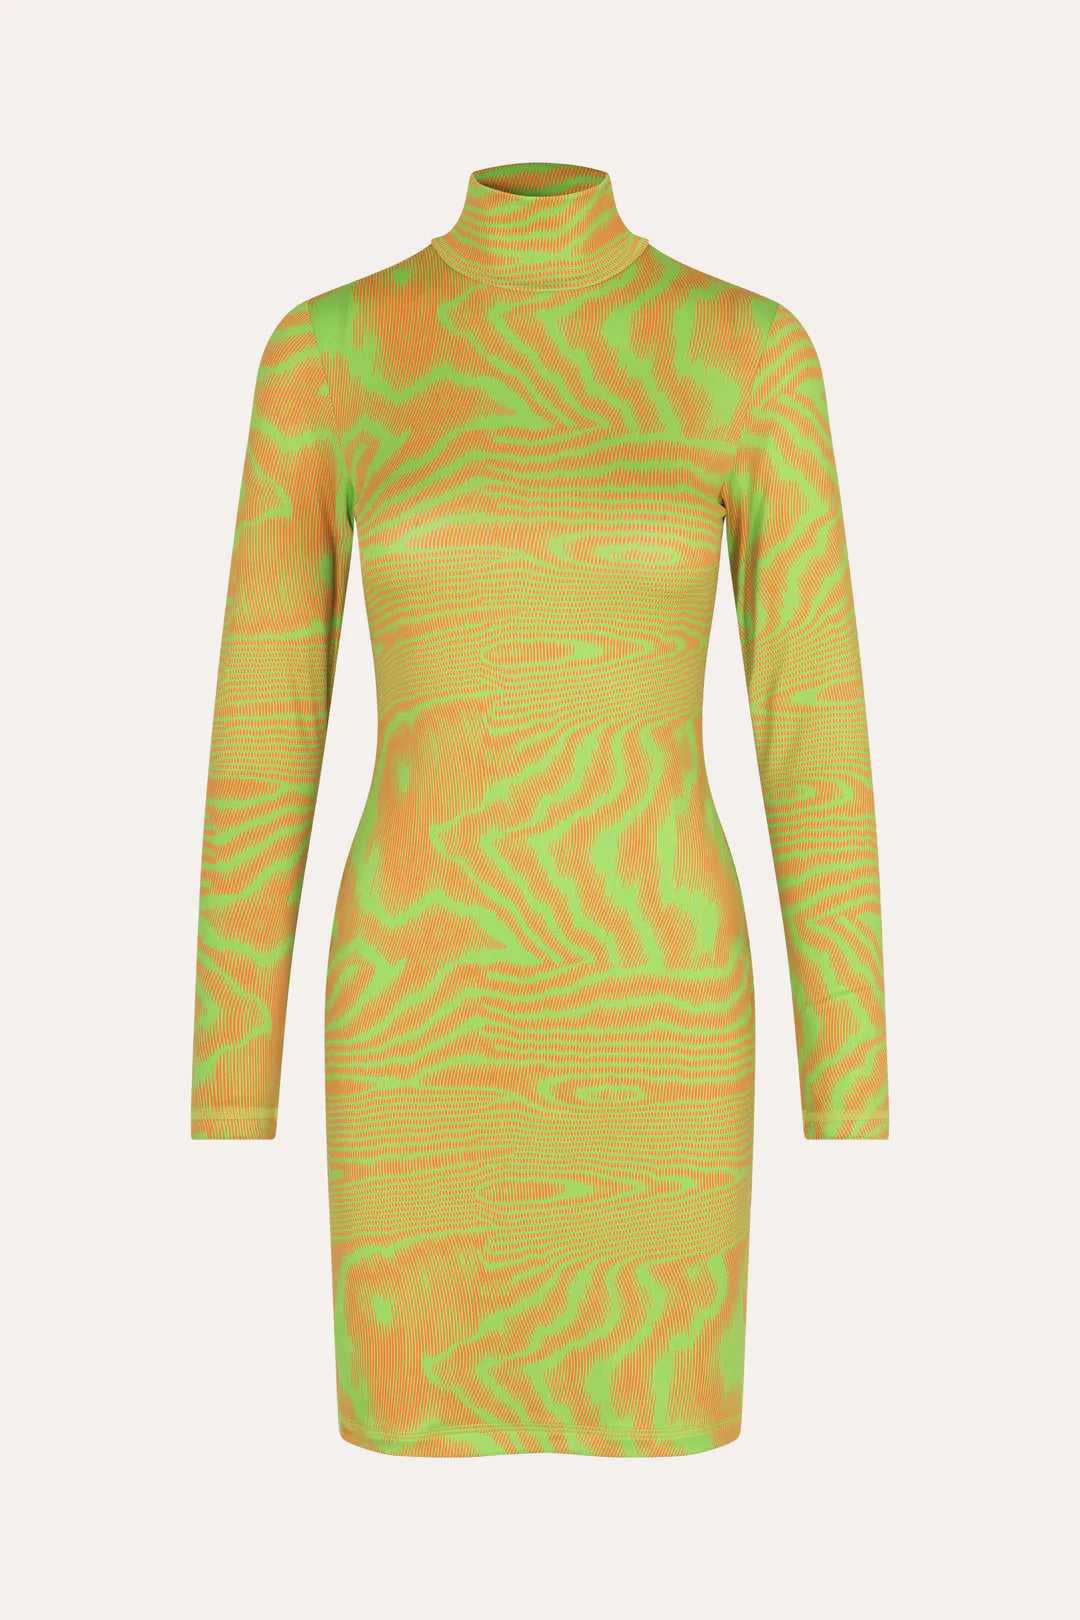 Stine Goya- Maribel Dress: Green/ Orange